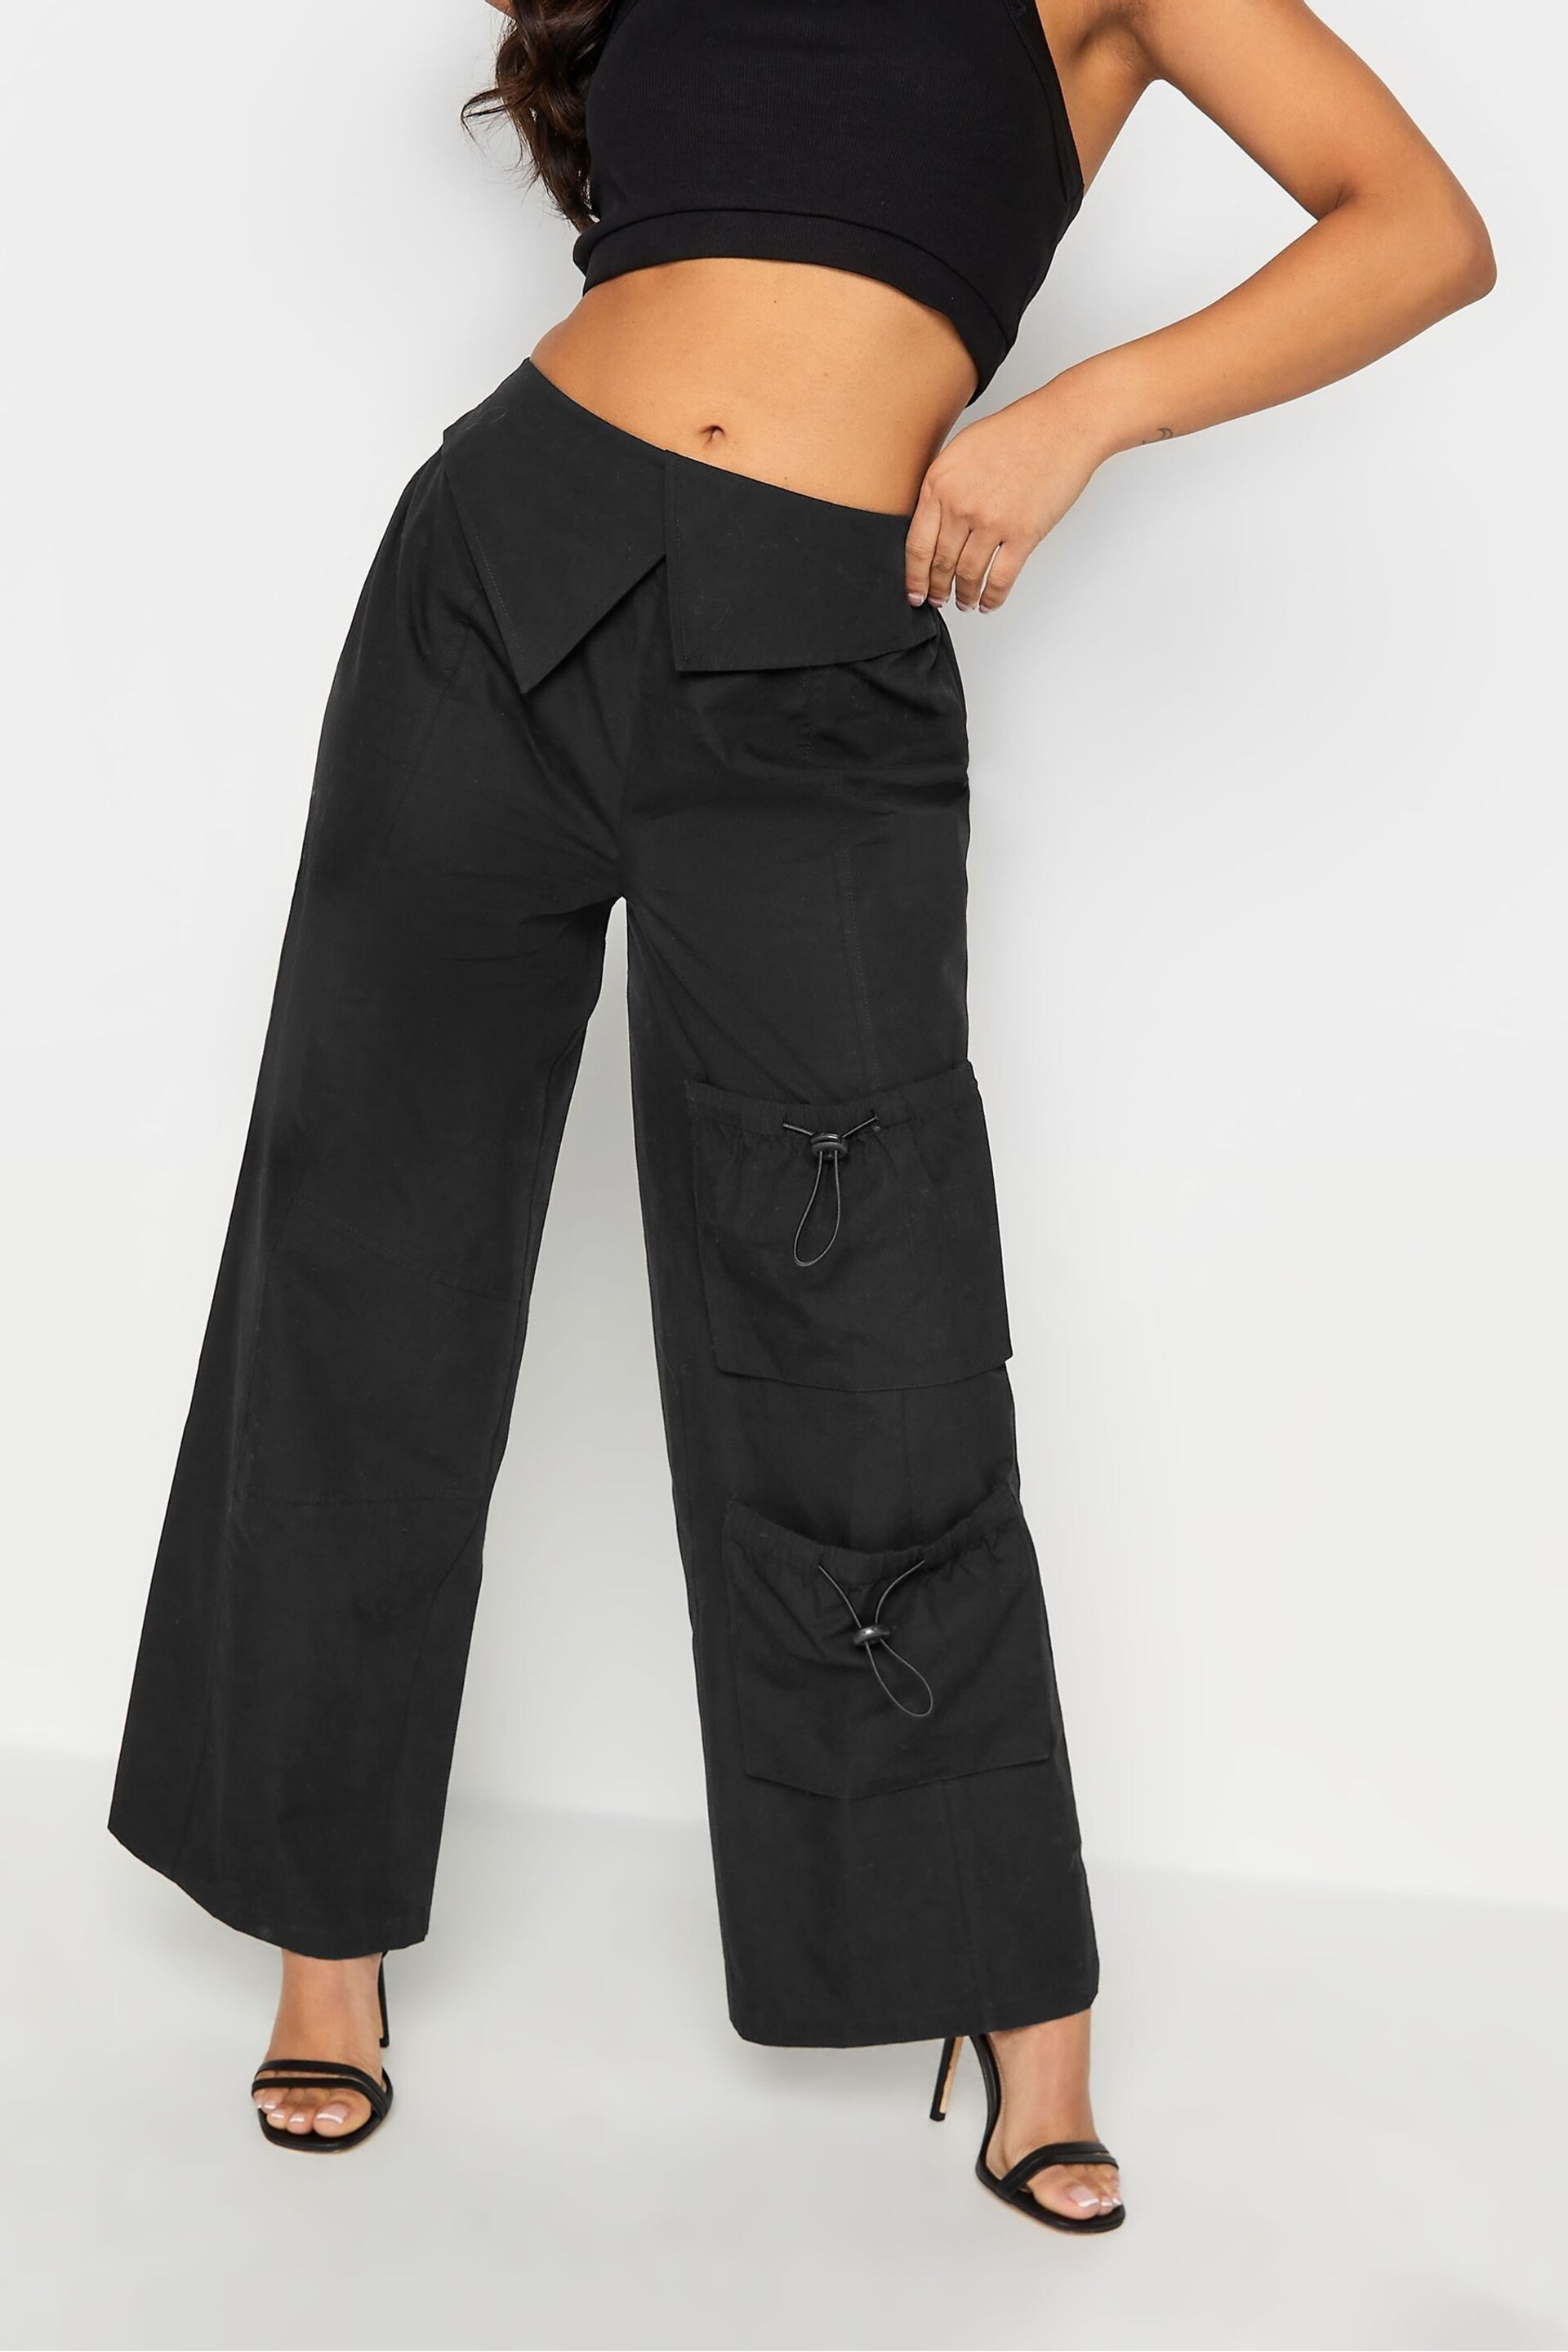 PixieGirl Petite Black Fold Over Cargo Trousers - Image 1 of 5